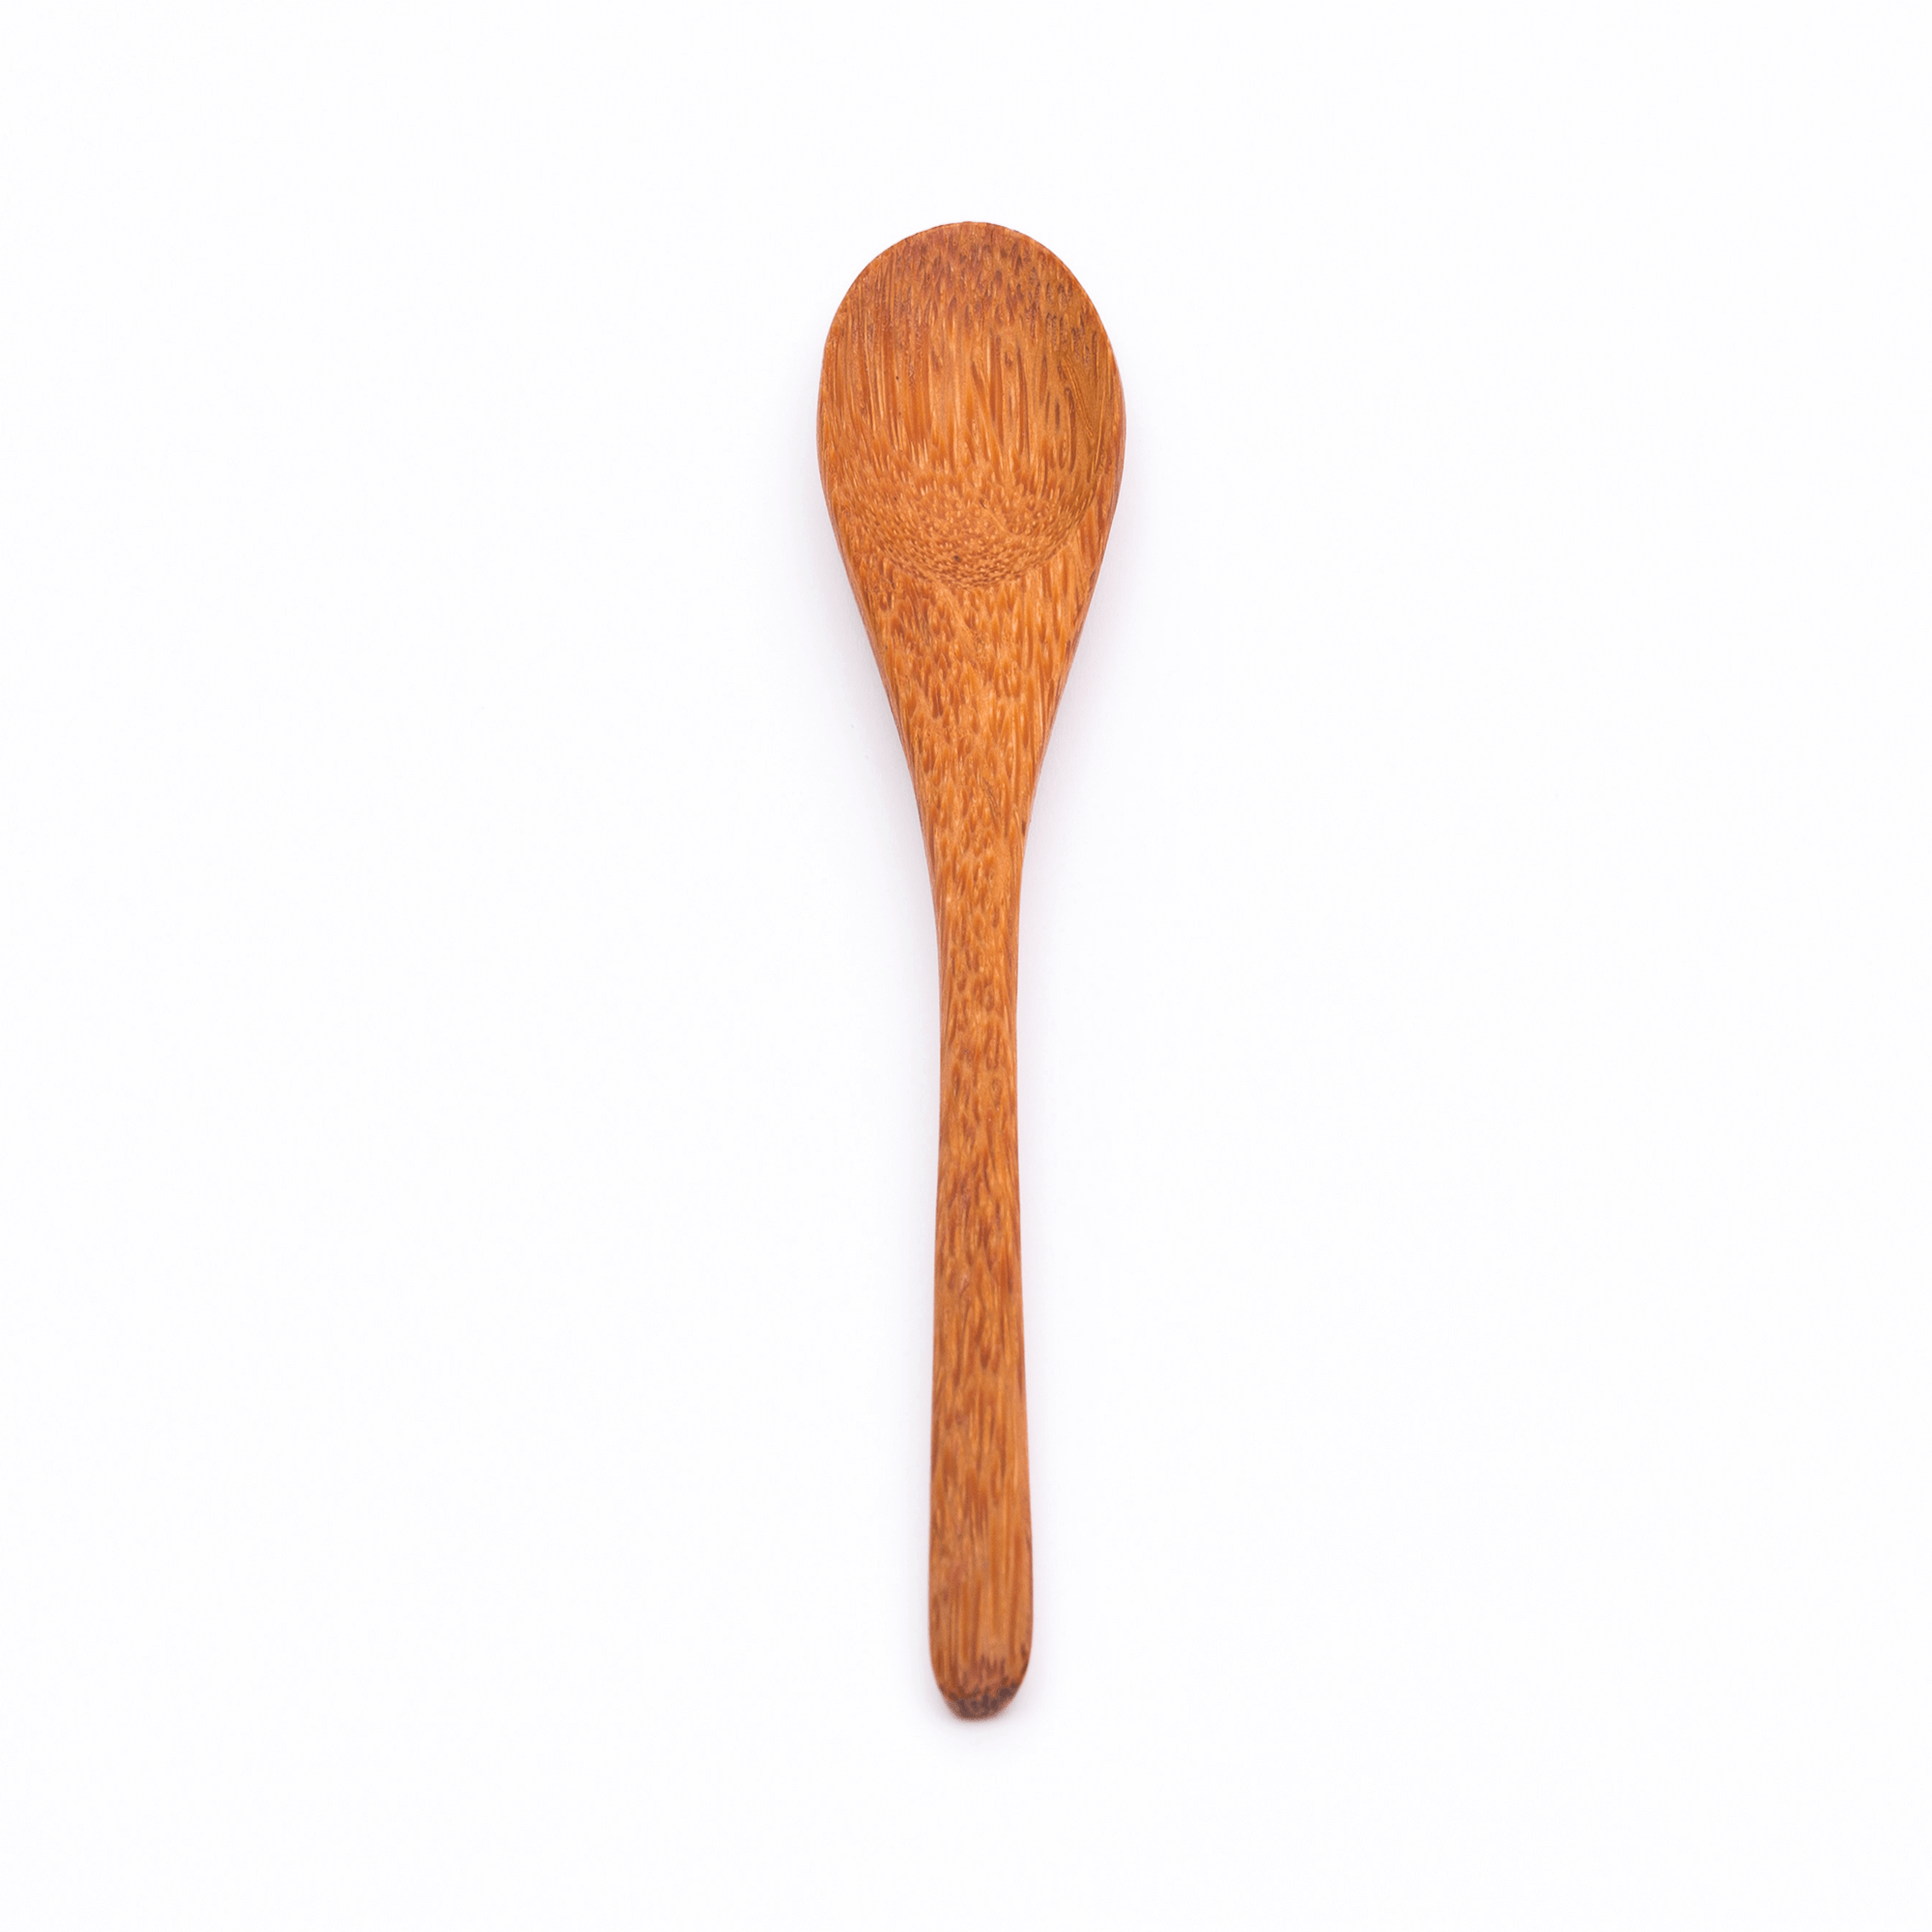 Coconut Wood Spoon